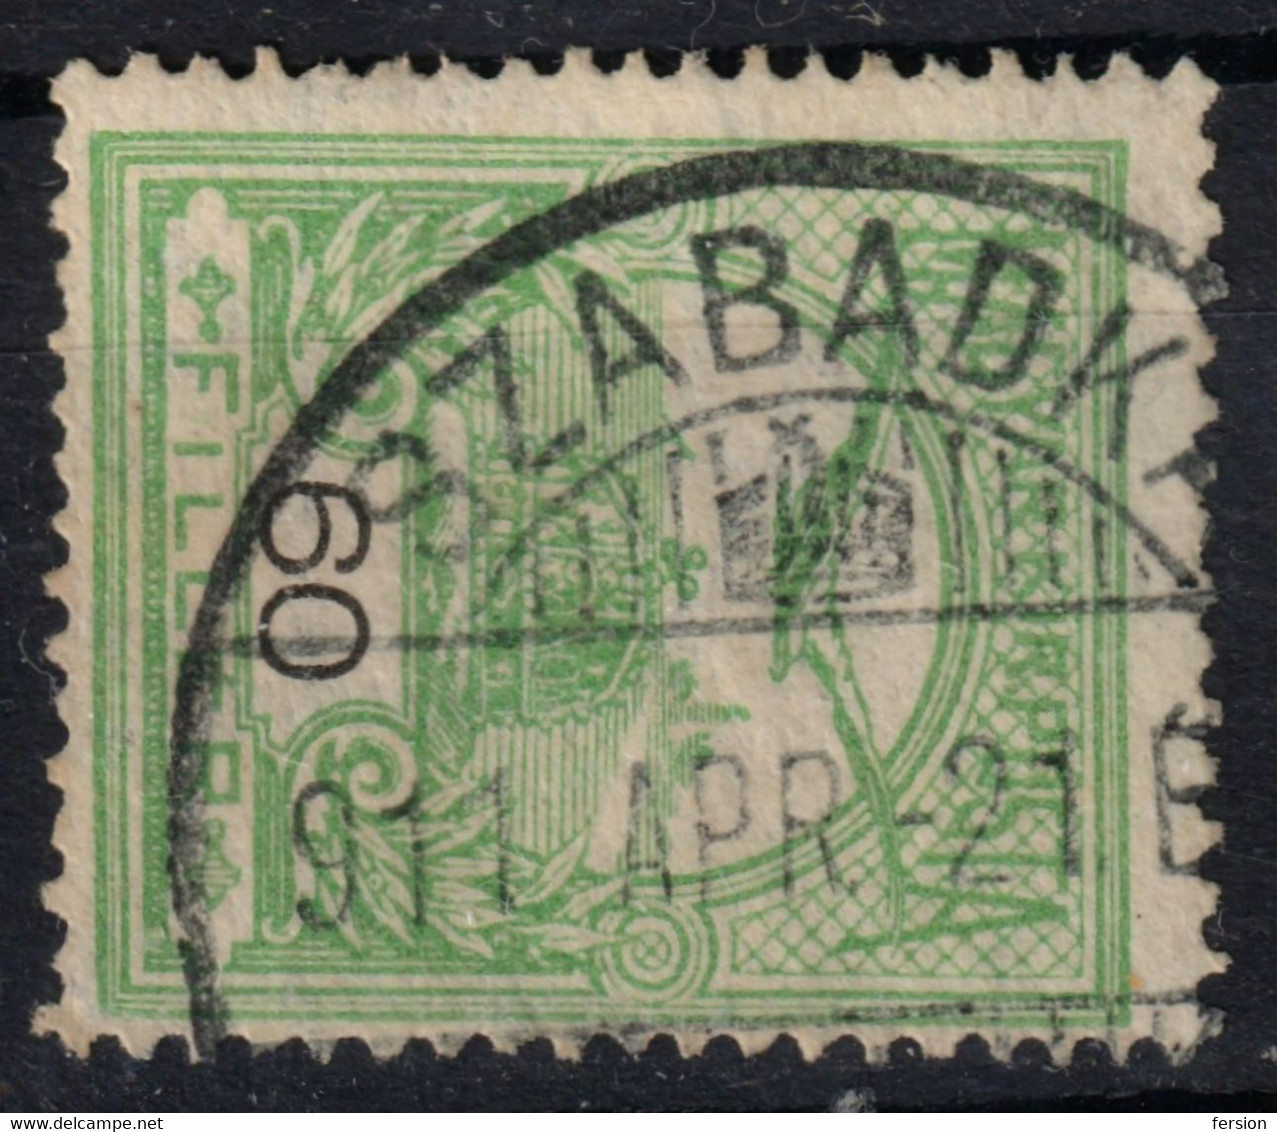 SZABADKA SUBOTICA Postmark TURUL Crown 1911 Hungary SERBIA Vojvodina BACKA BÁCS BODROG County KuK - 5 Fill - Prephilately